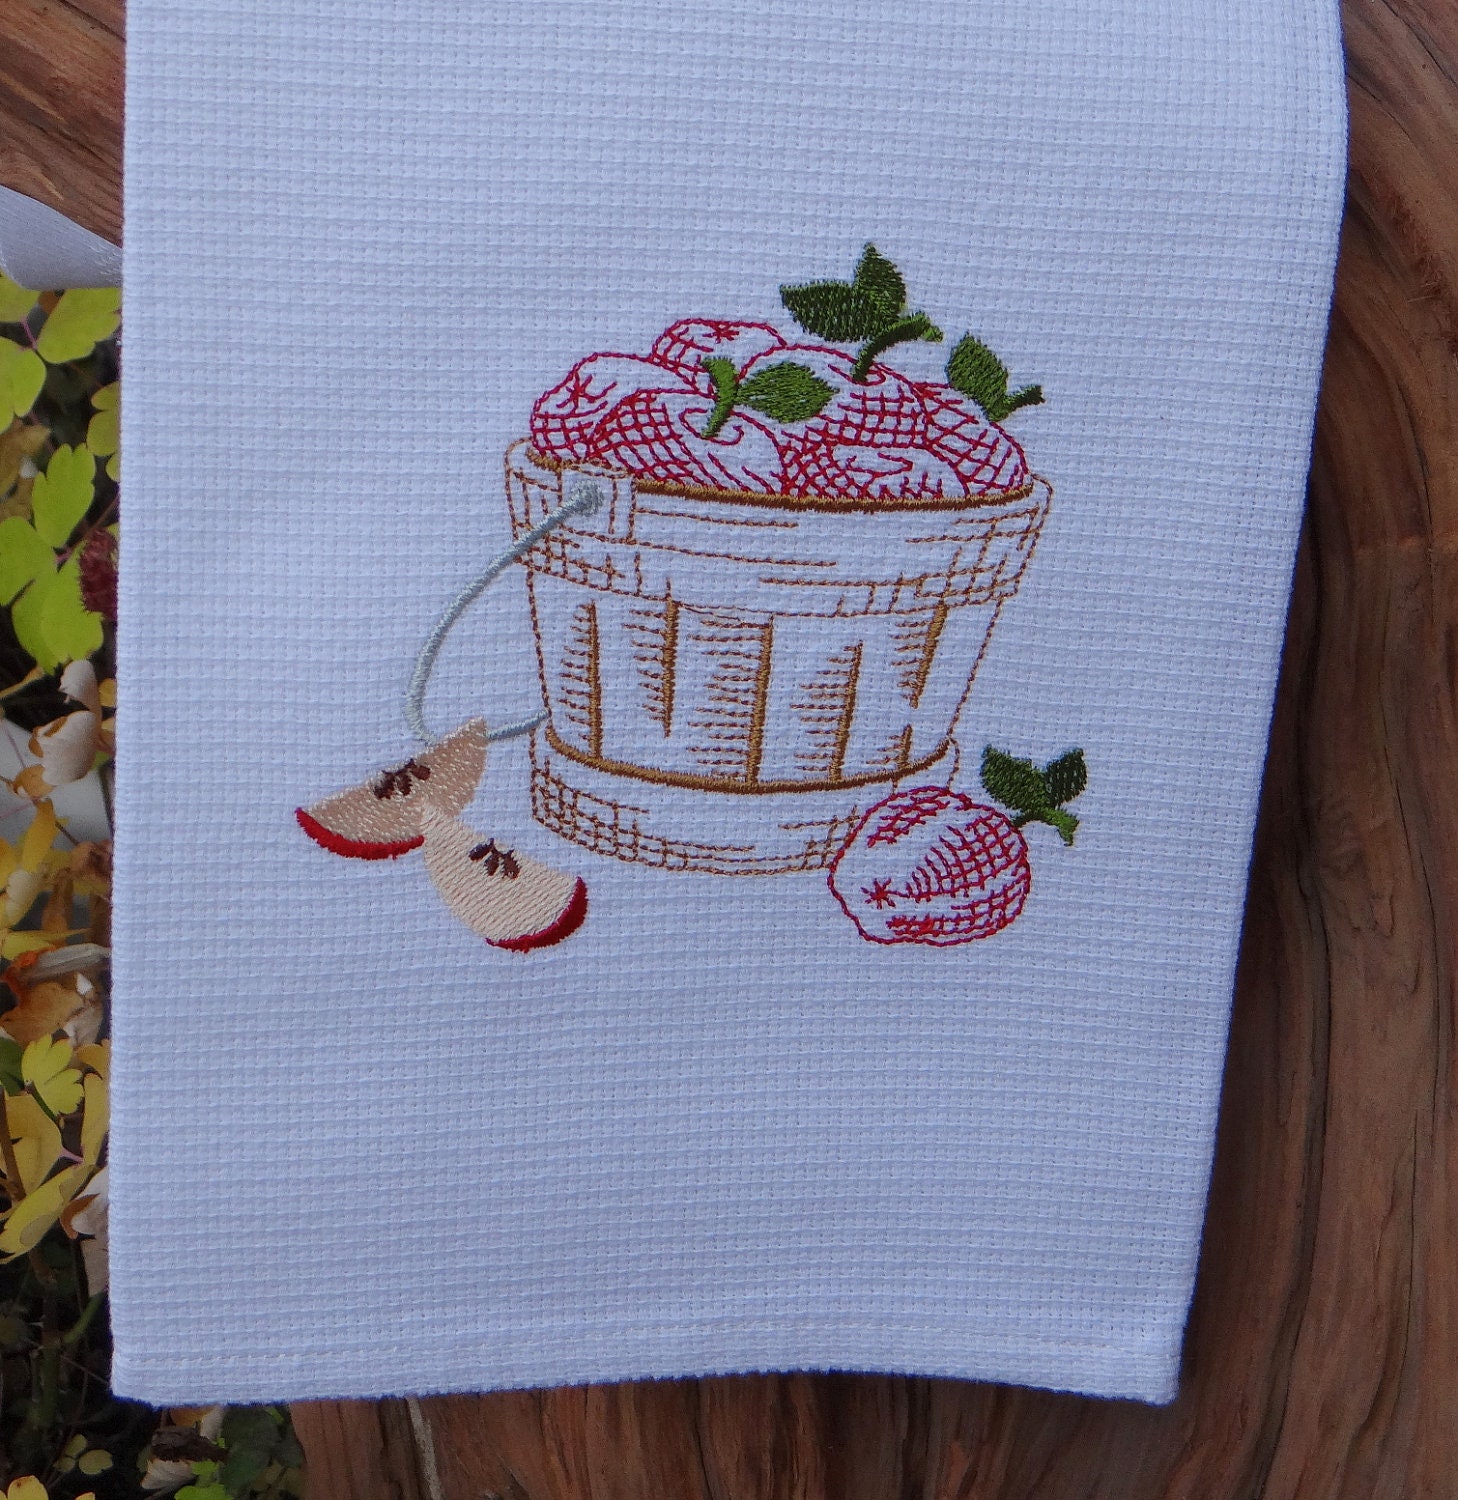 Harvest Theme Cotton Huck Kitchen Towel - Apple Basket